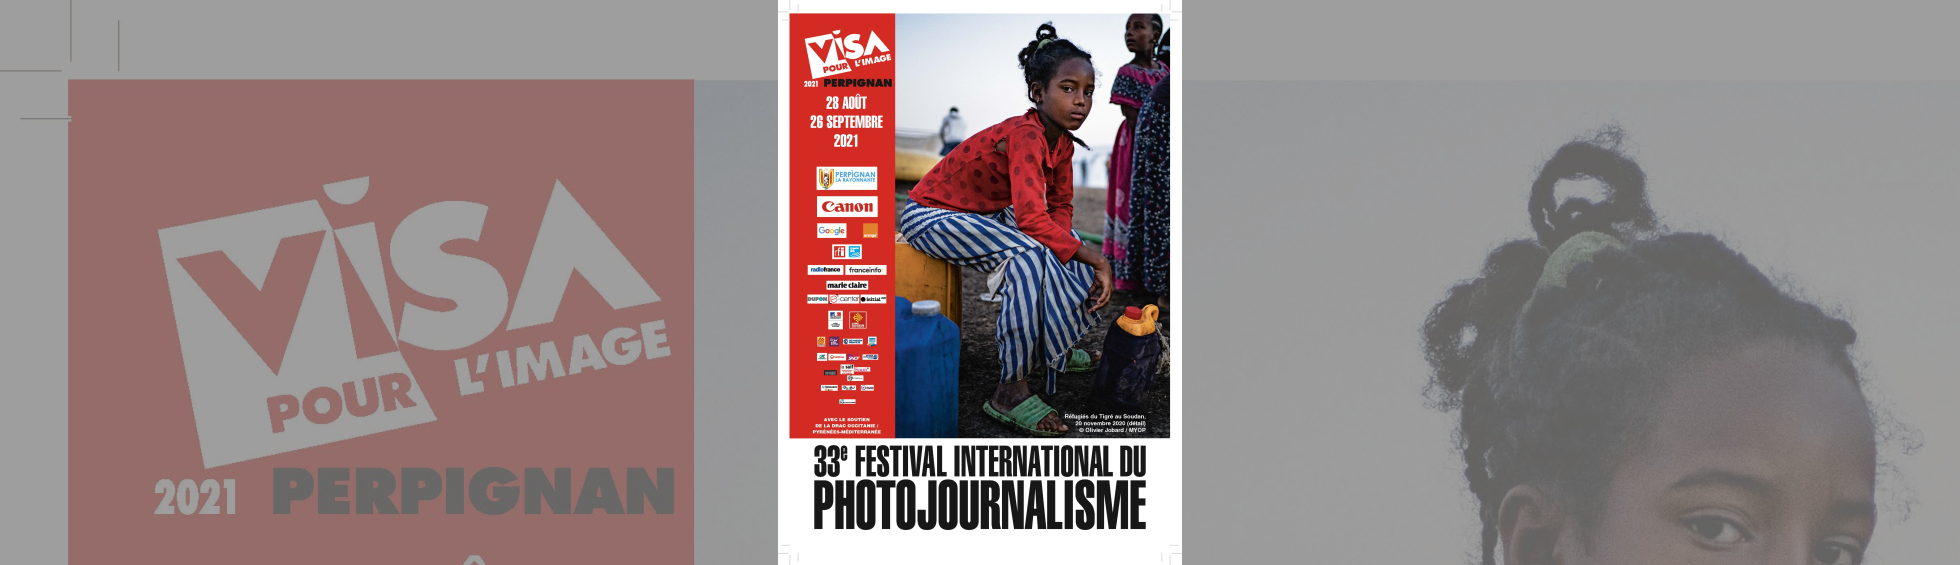 Affiche Festival International du Photojournalisme